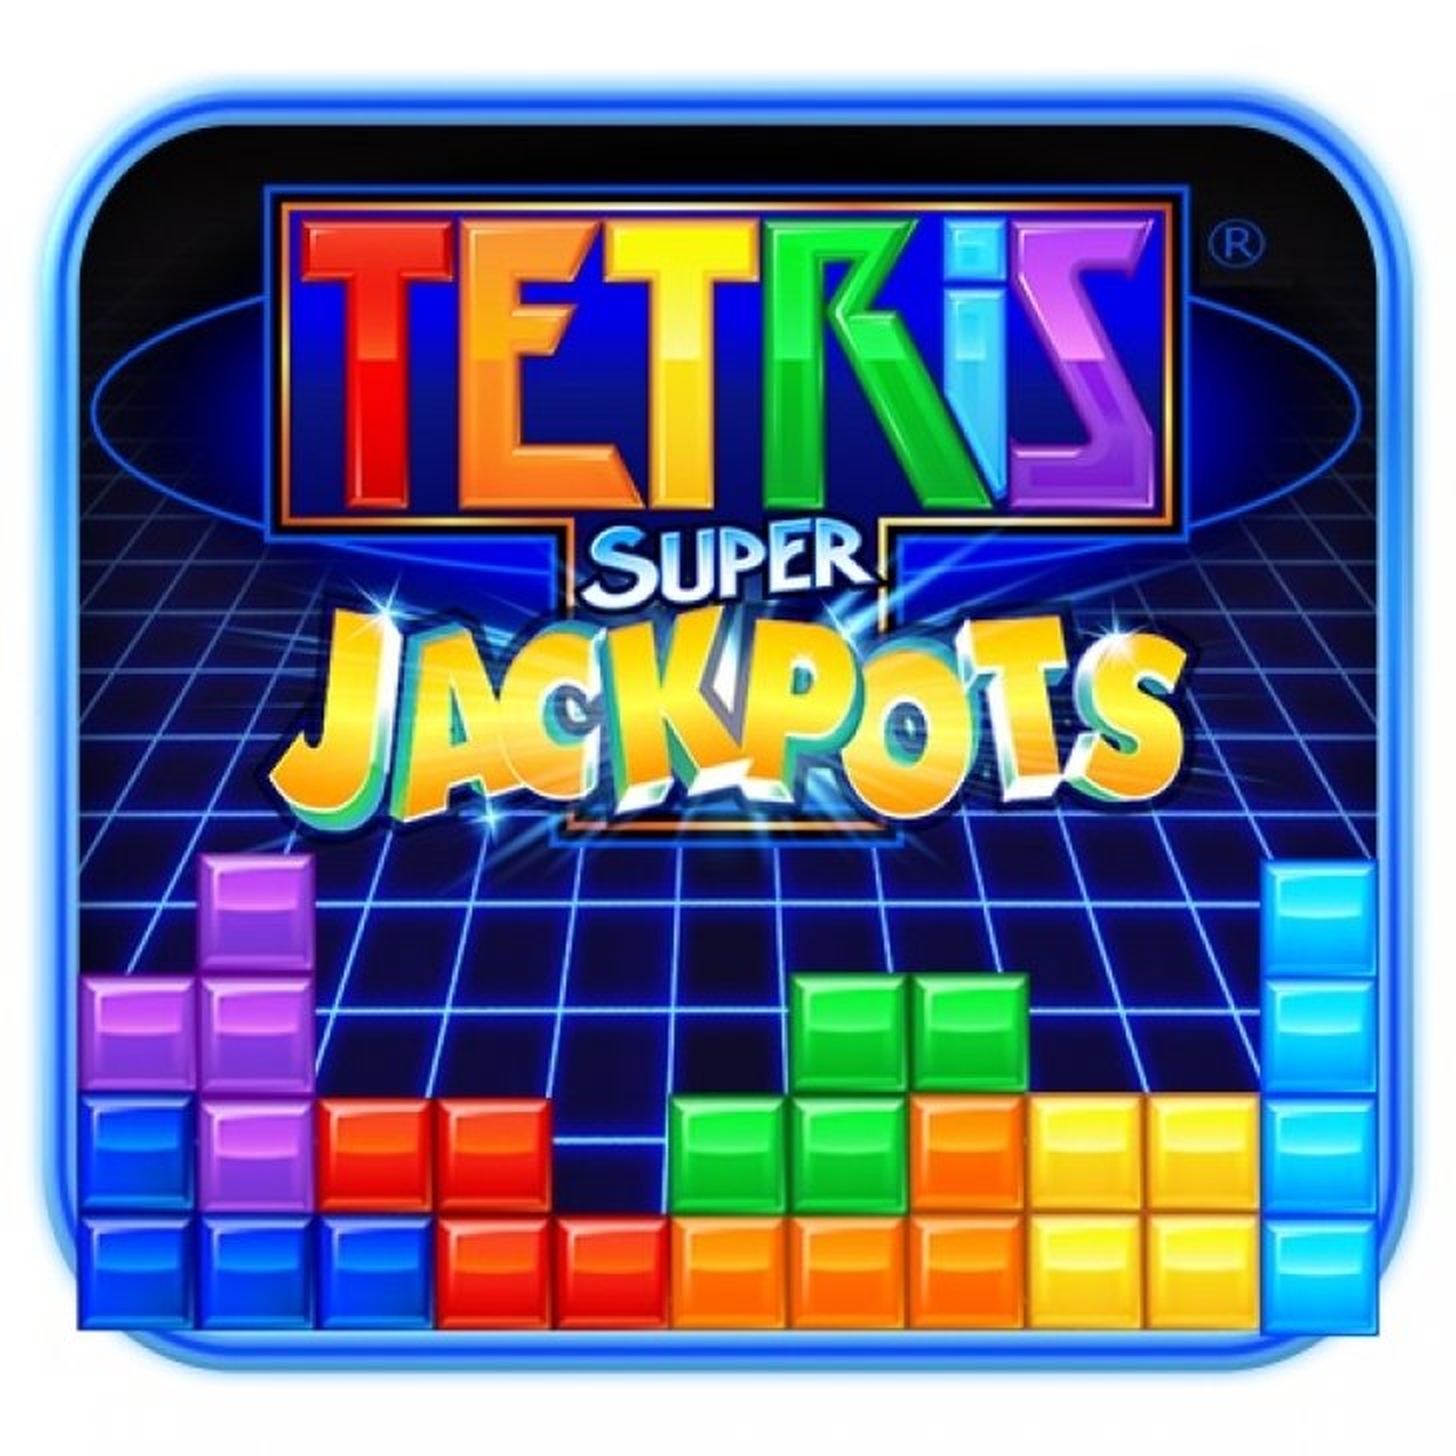 Tetris Super Jackpots demo